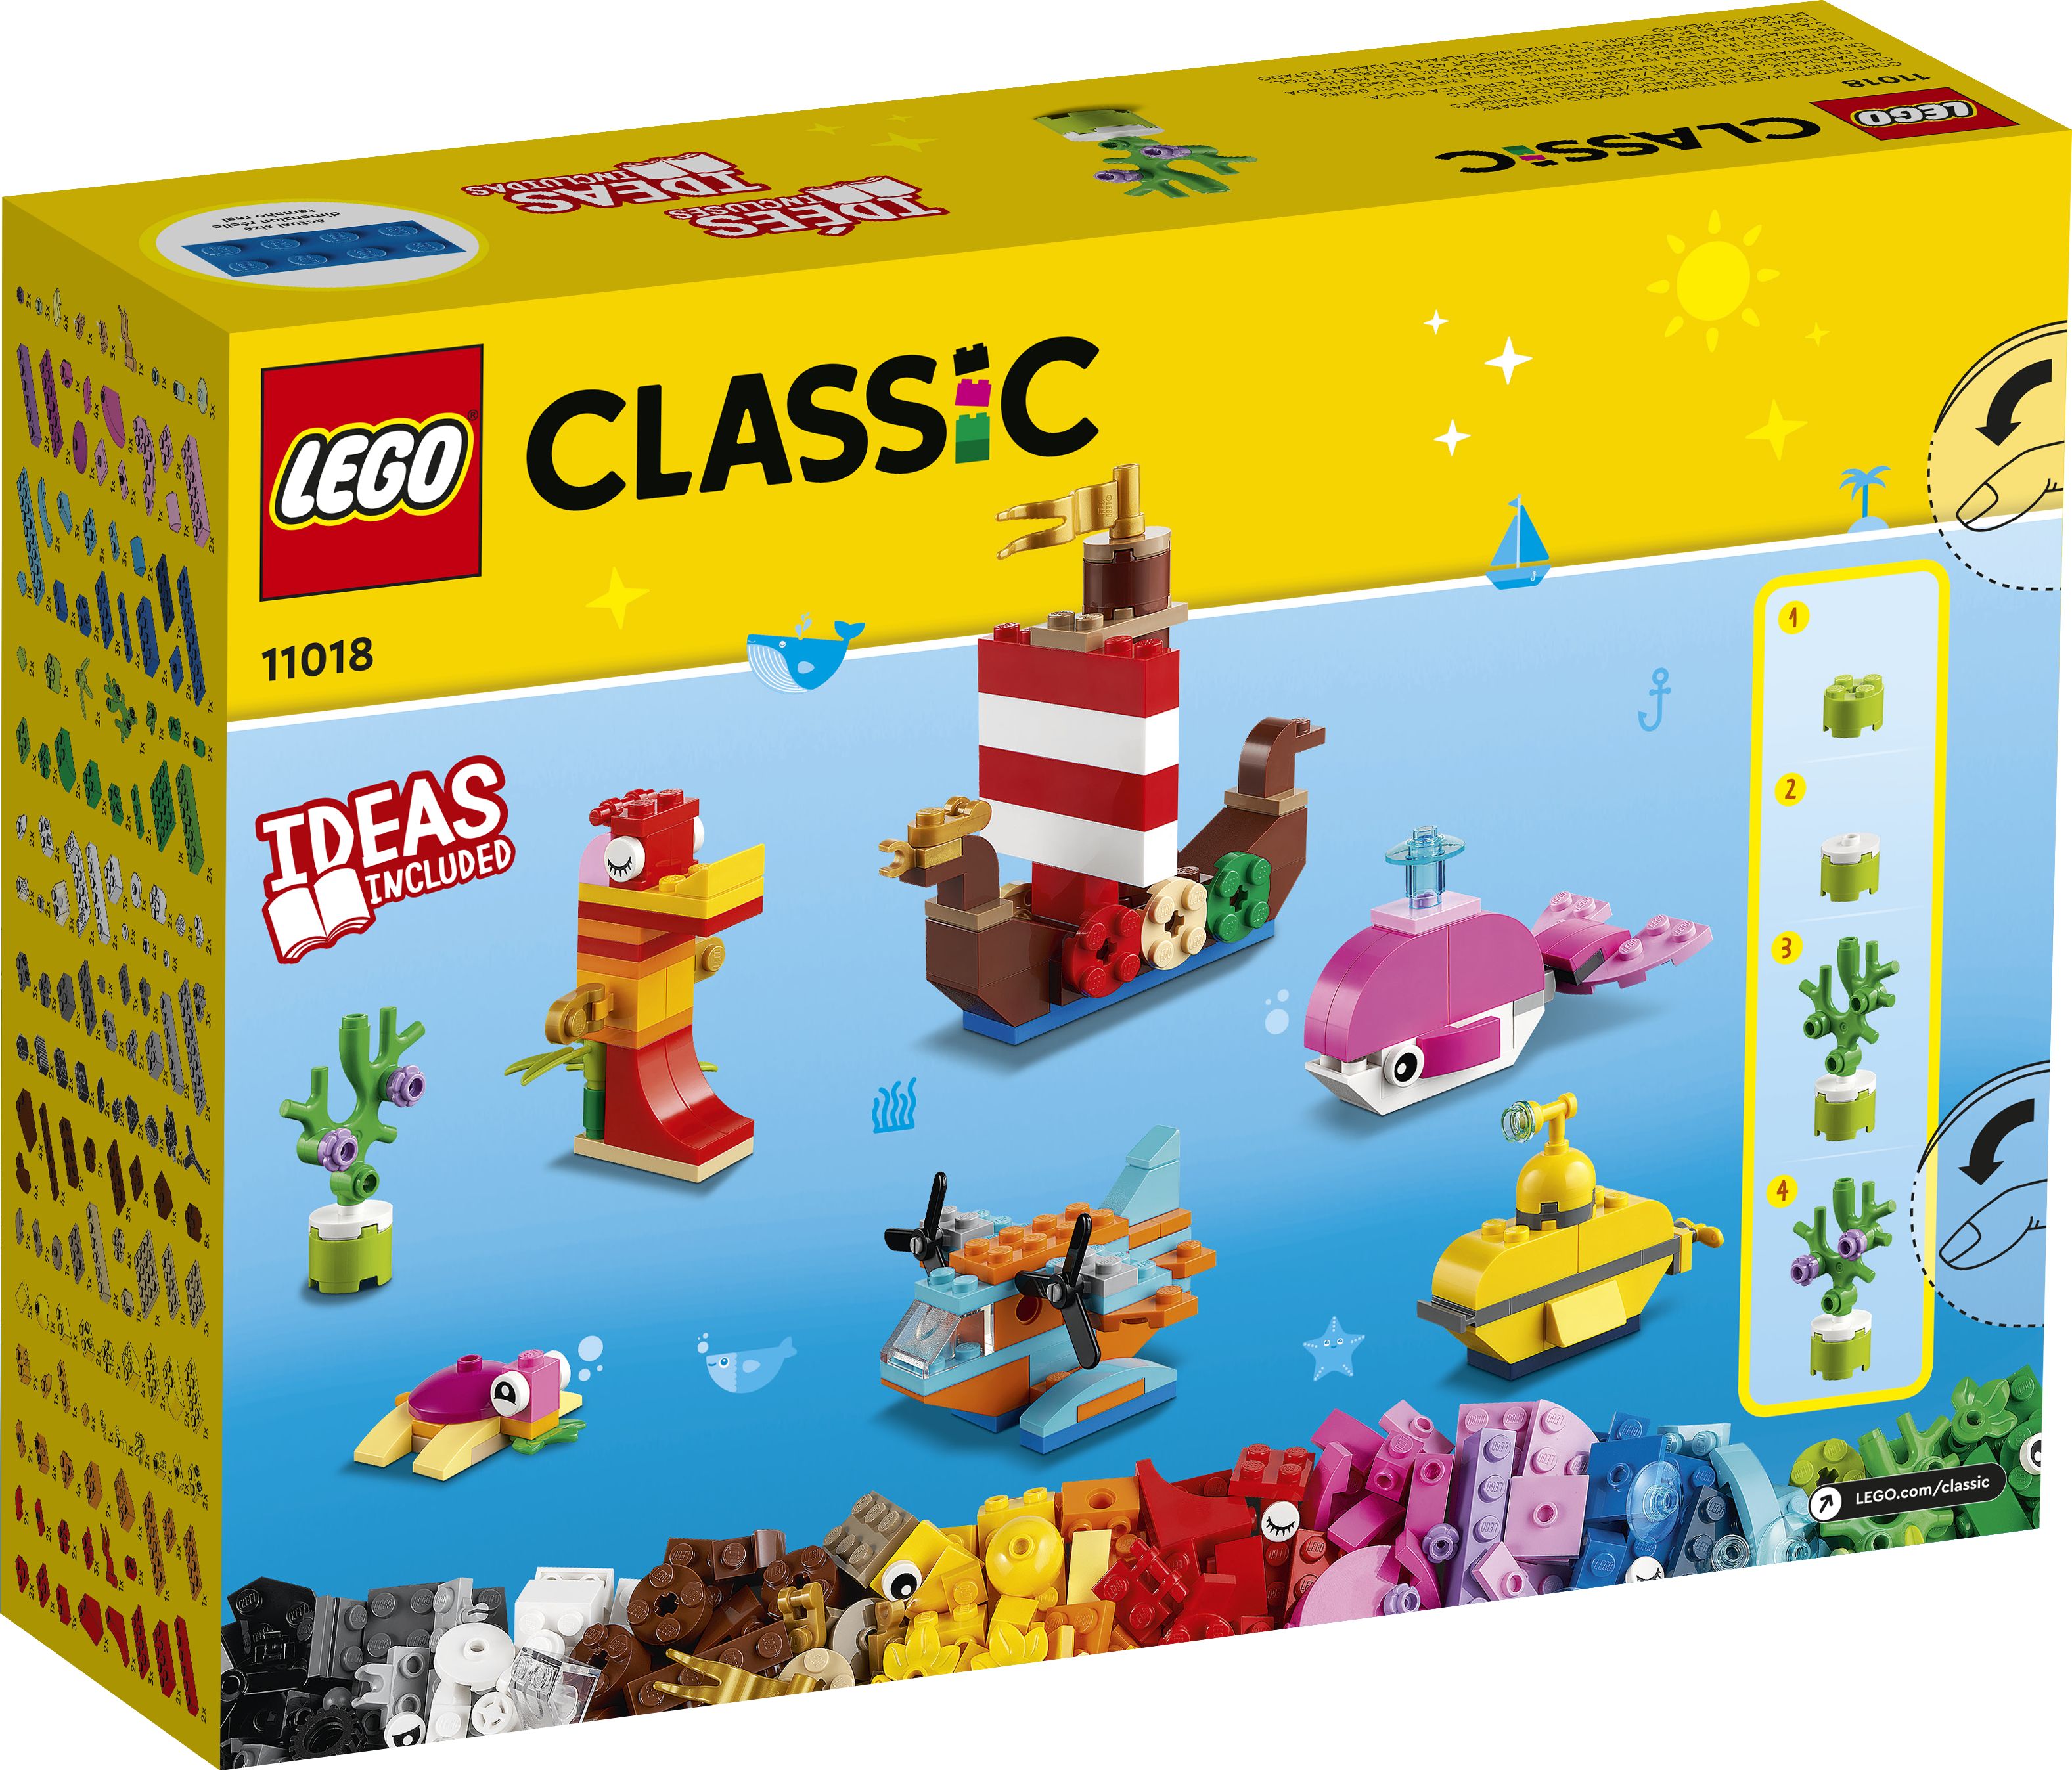 LEGO Classic 11018 Kreativer Meeresspaß LEGO_11018_Box5_v39.jpg